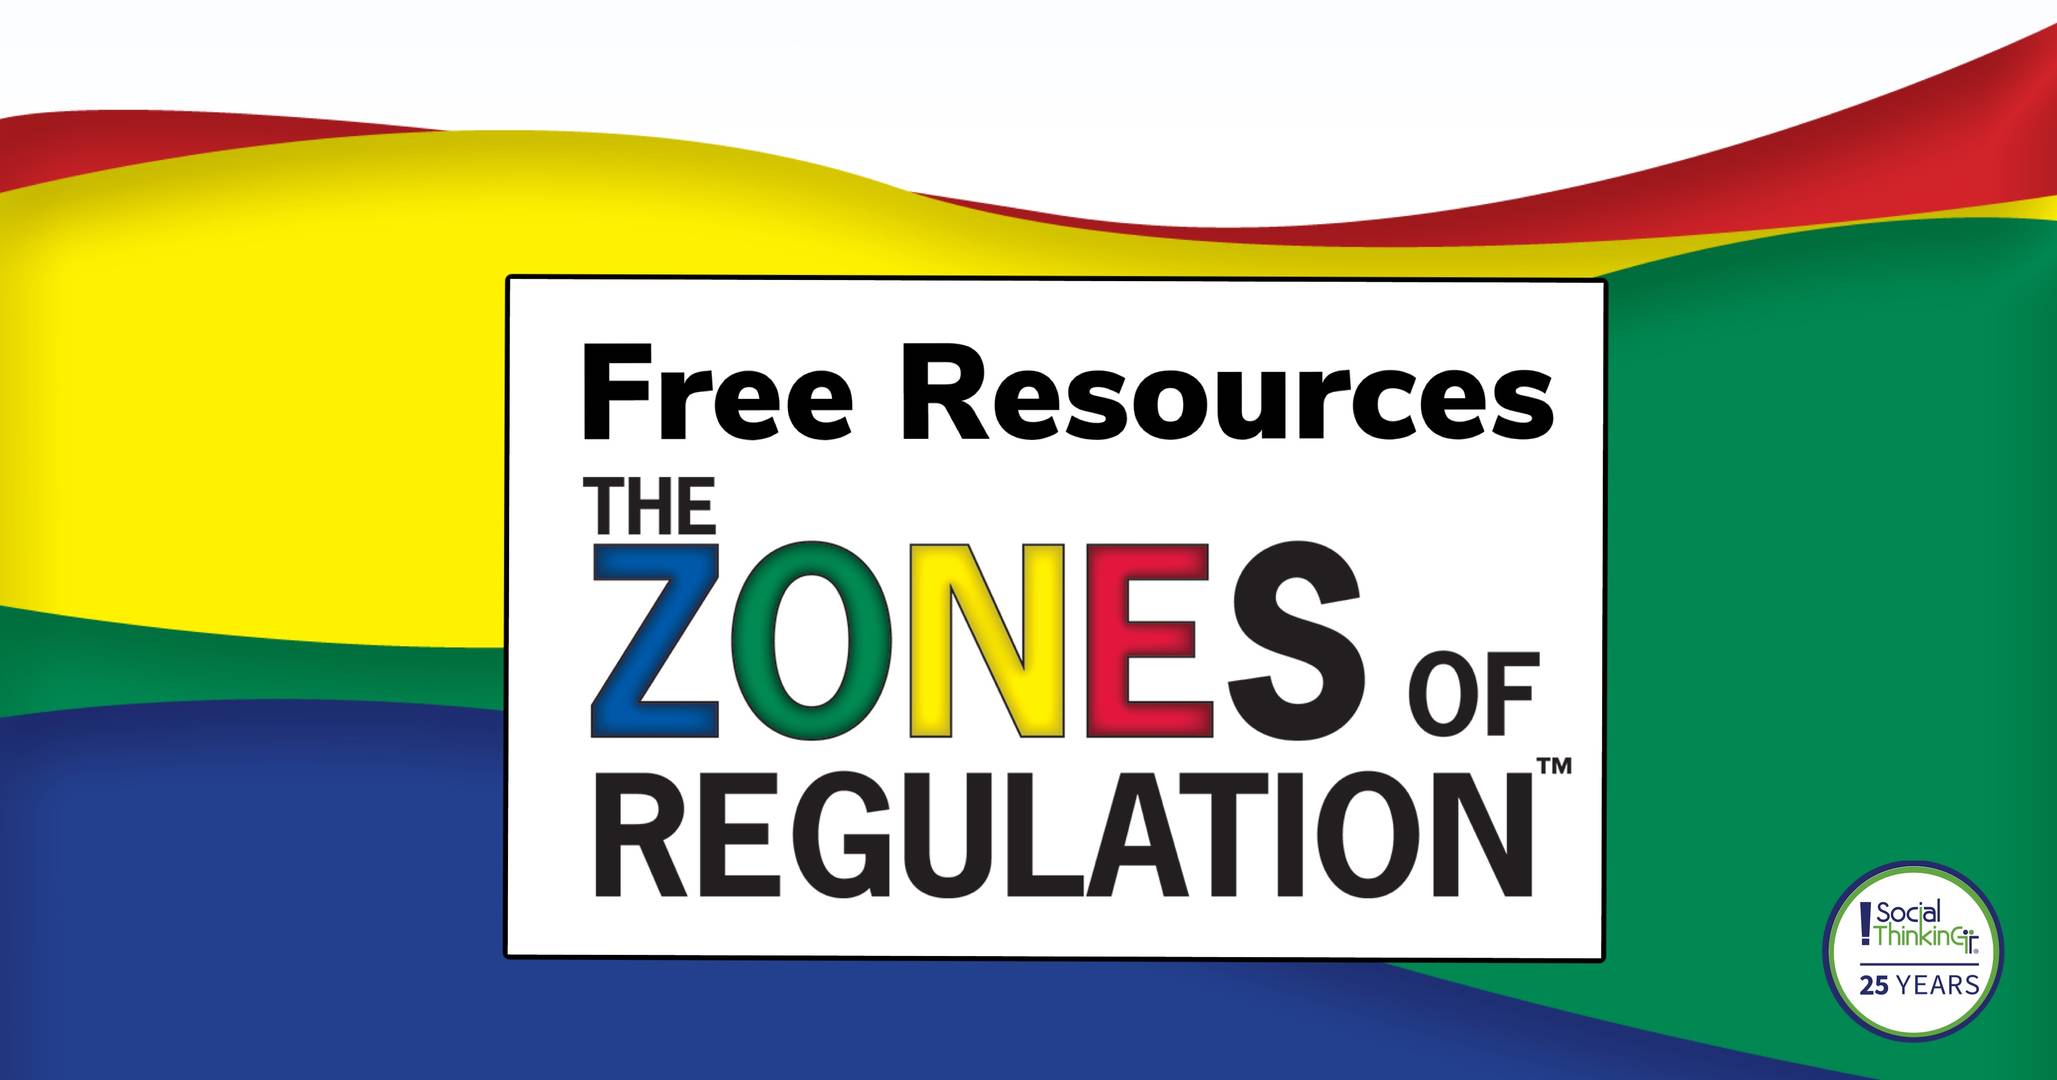 socialthinking-the-zones-of-regulation-free-stuff